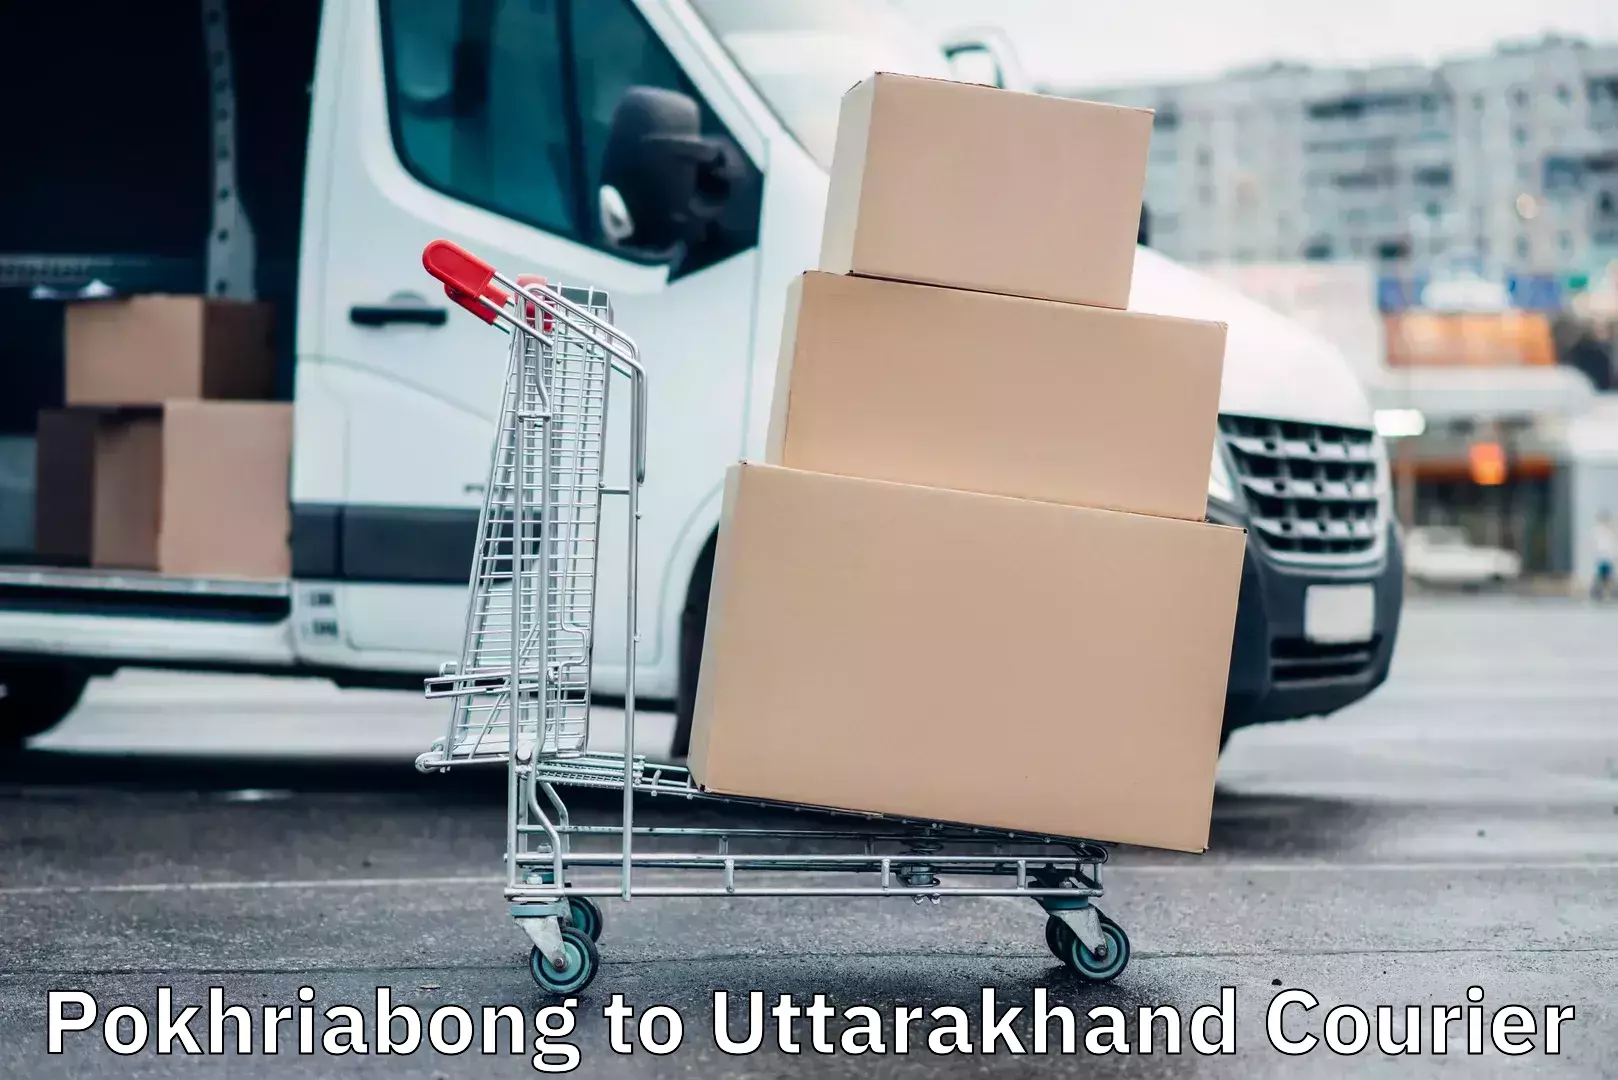 Global logistics network Pokhriabong to Uttarakhand